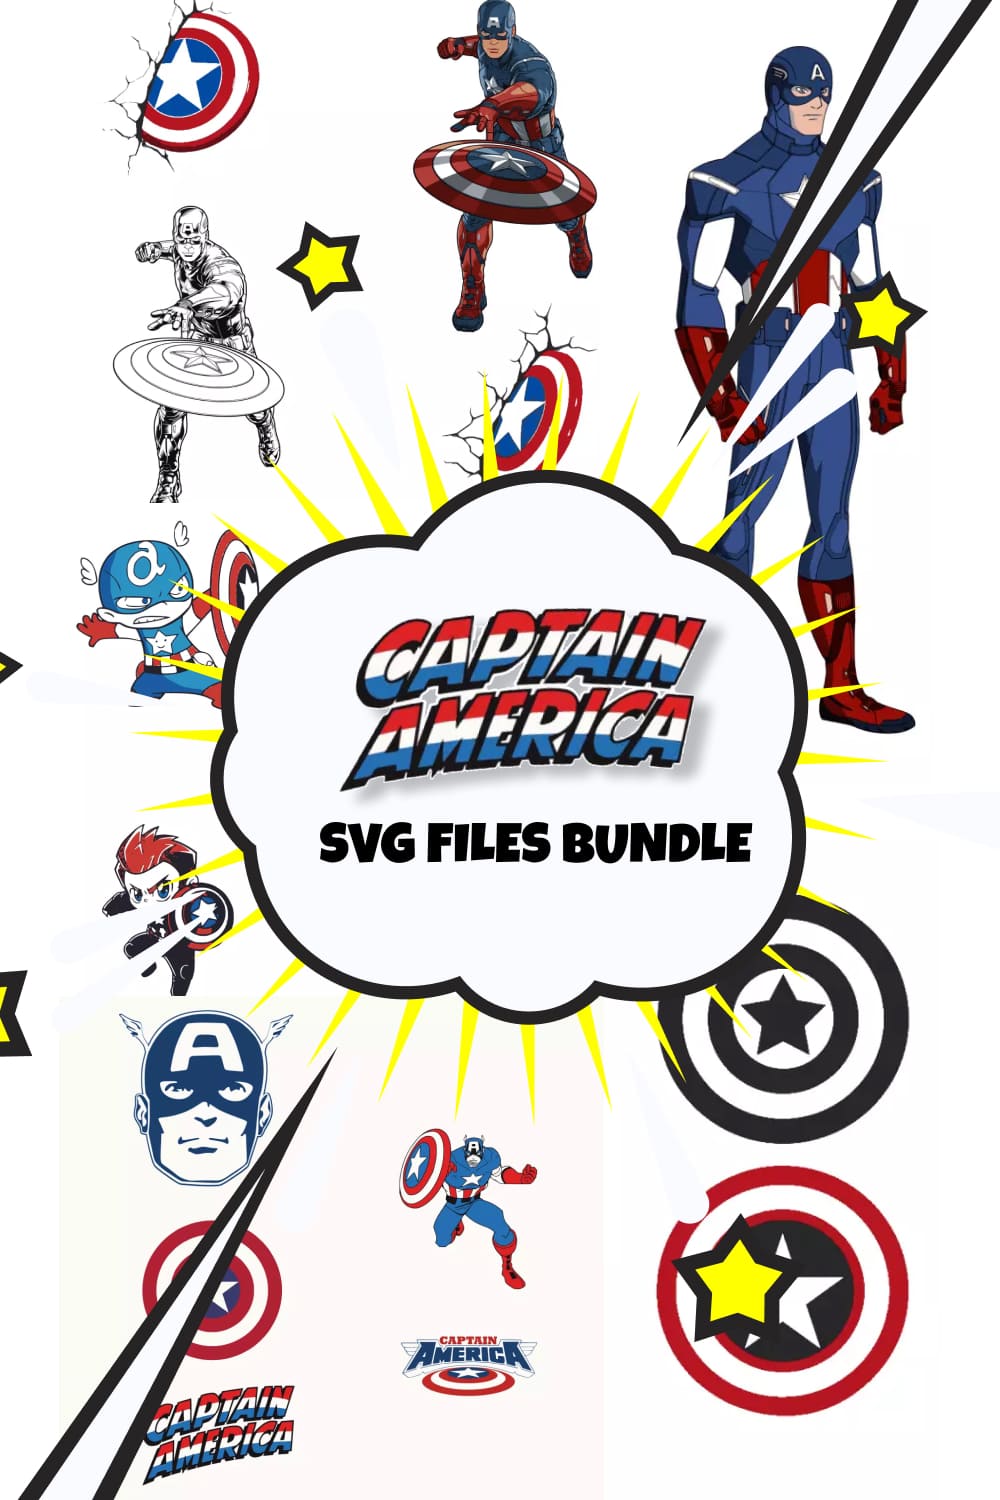 Captain america SVG files bundle, picture for Pinterest.